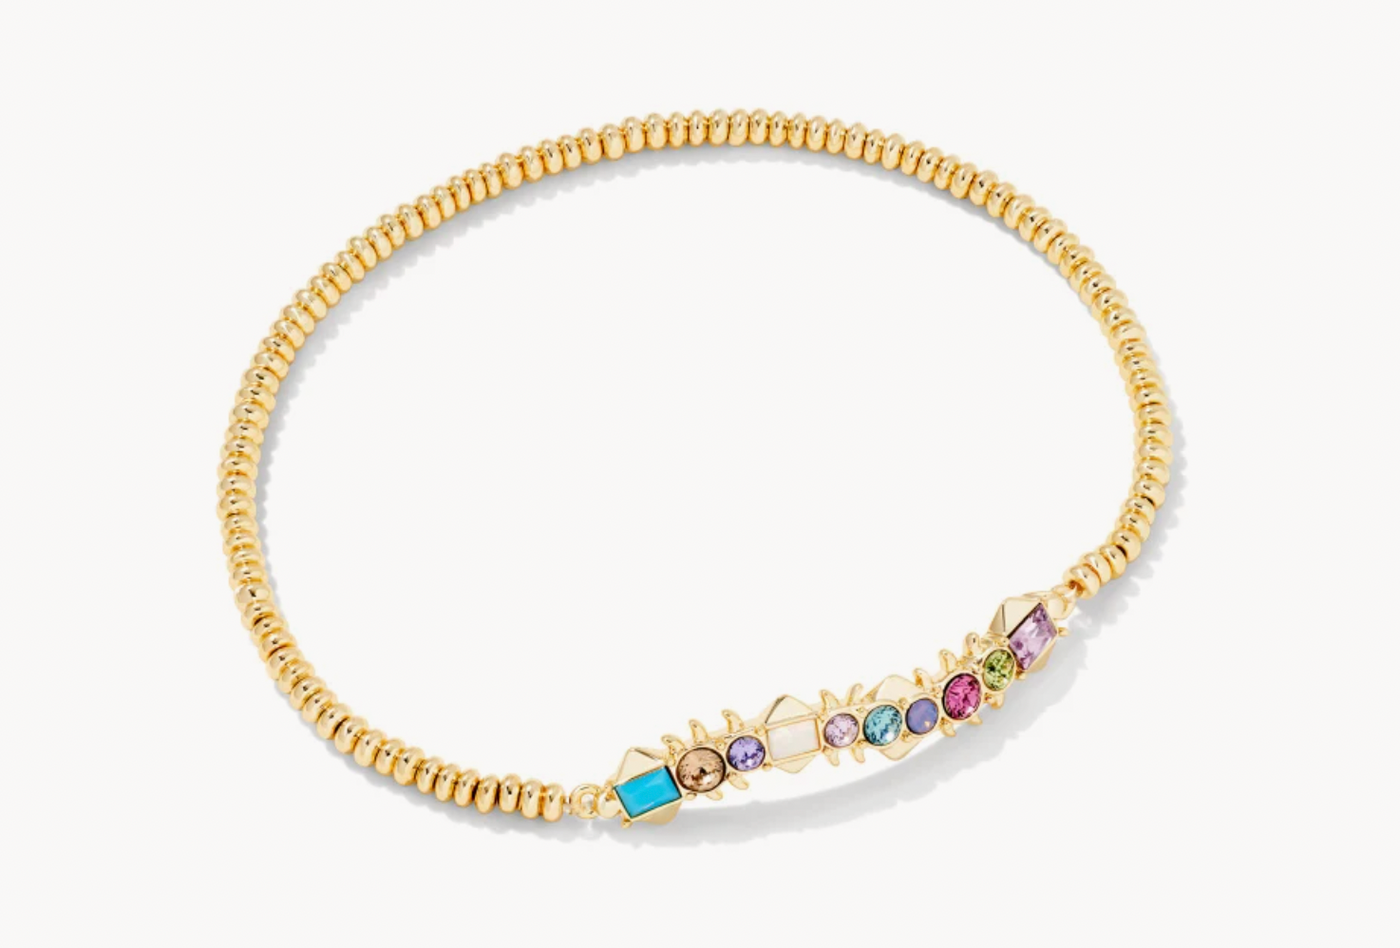 Kendra Scott Devin Gold Crystal Stretch Bracelet in Pastel Mix